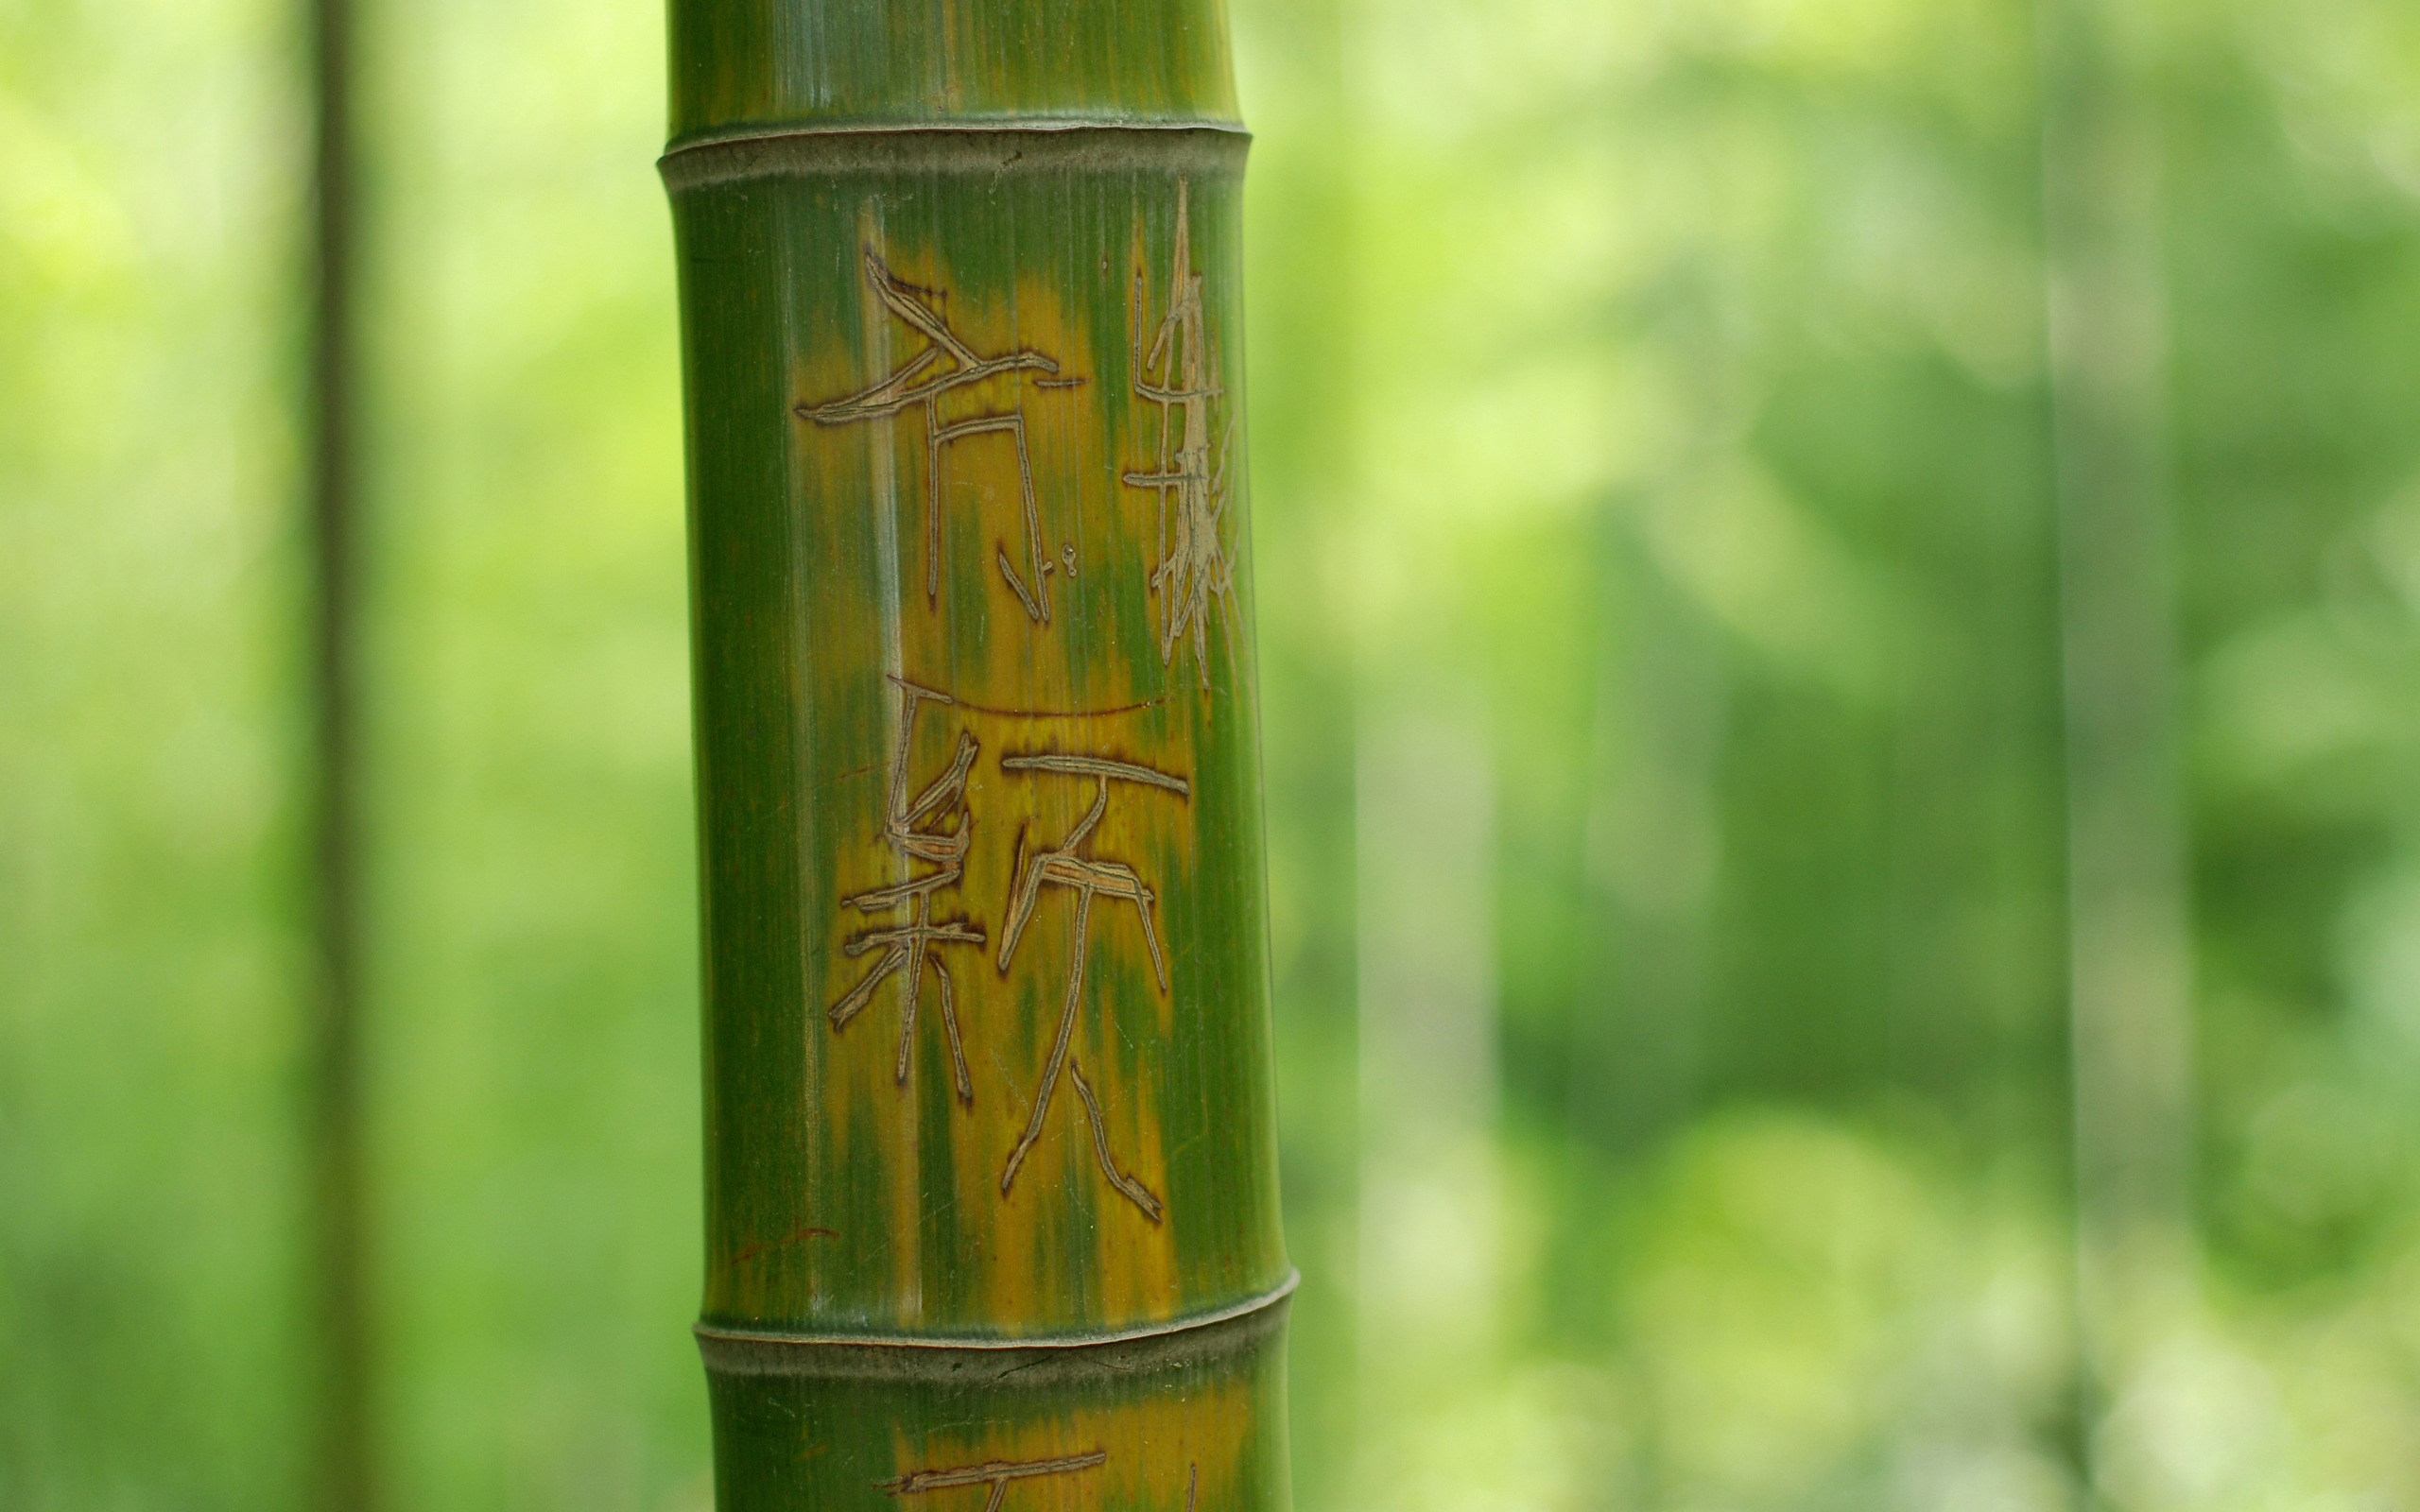 175760 descargar imagen tierra/naturaleza, bambú: fondos de pantalla y protectores de pantalla gratis